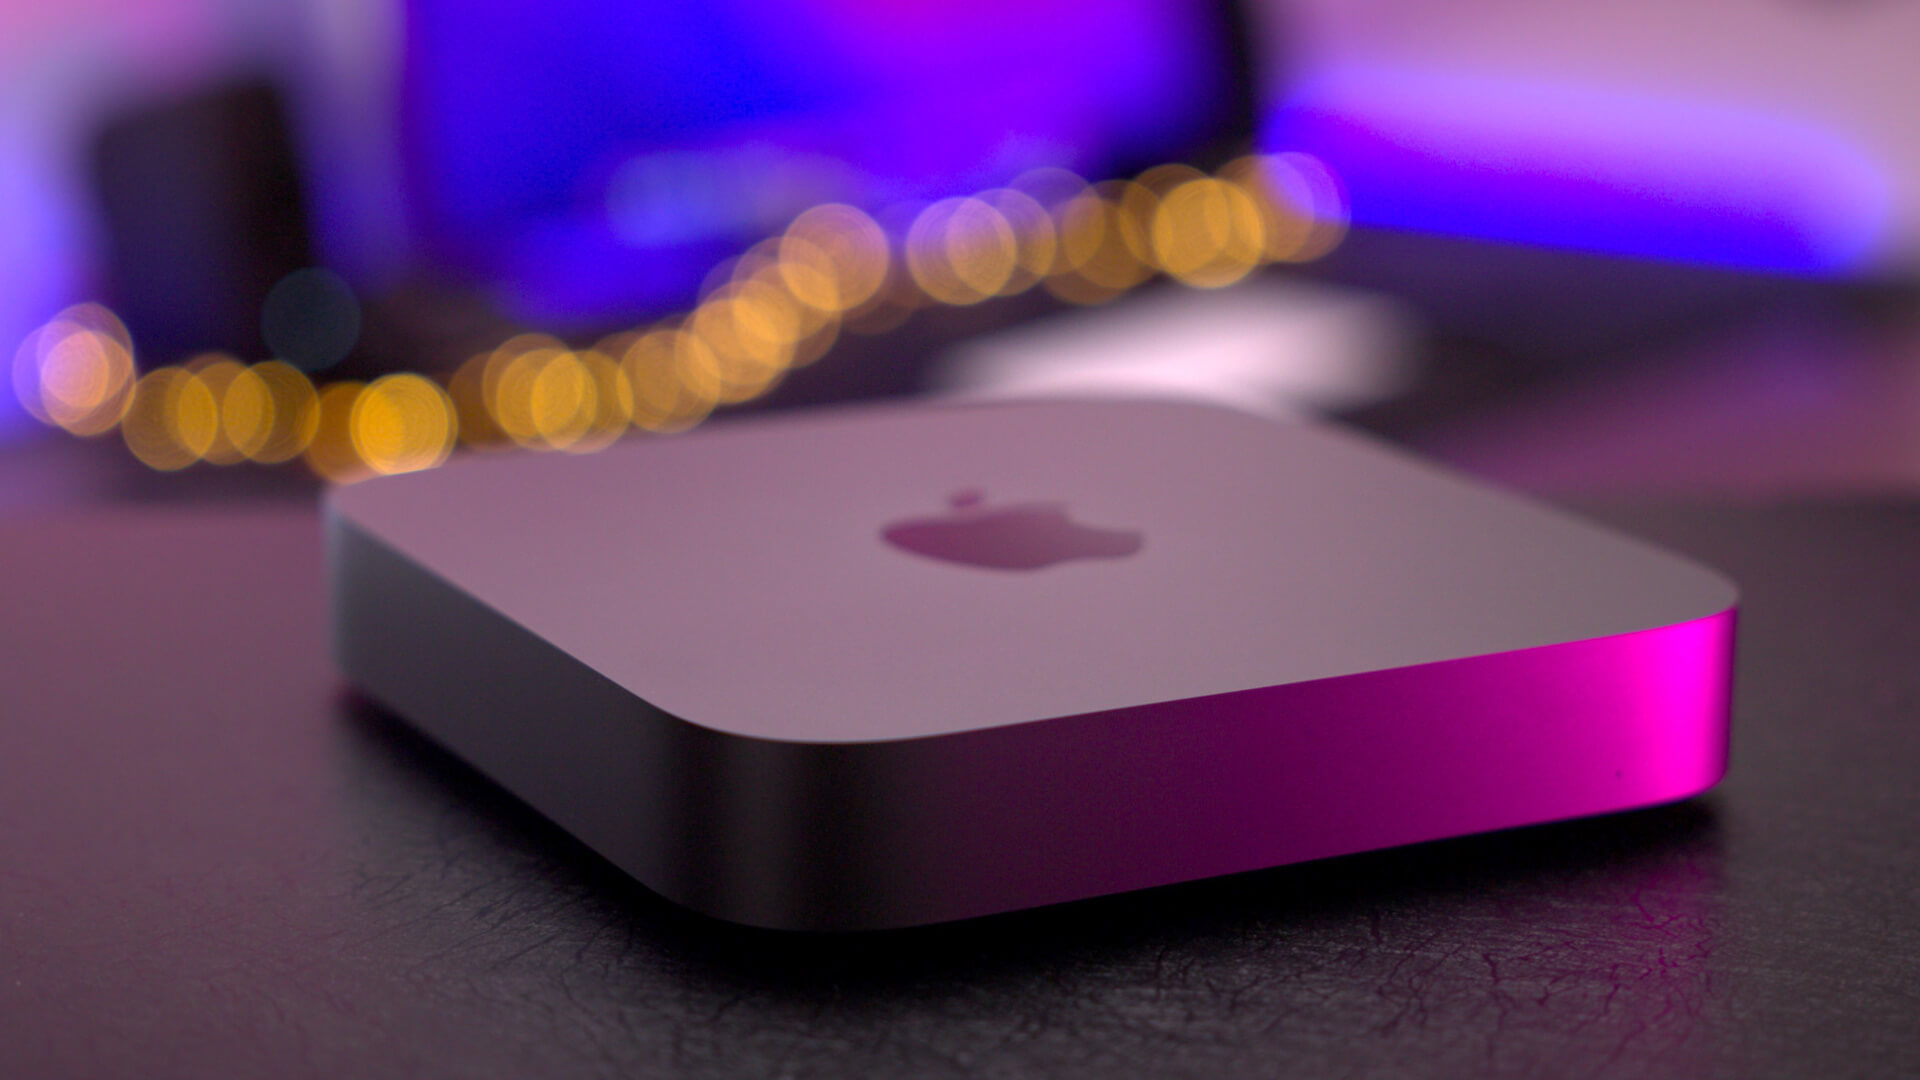 Прошивка Apple Studio Display намекает на скорый выход нового Mac mini